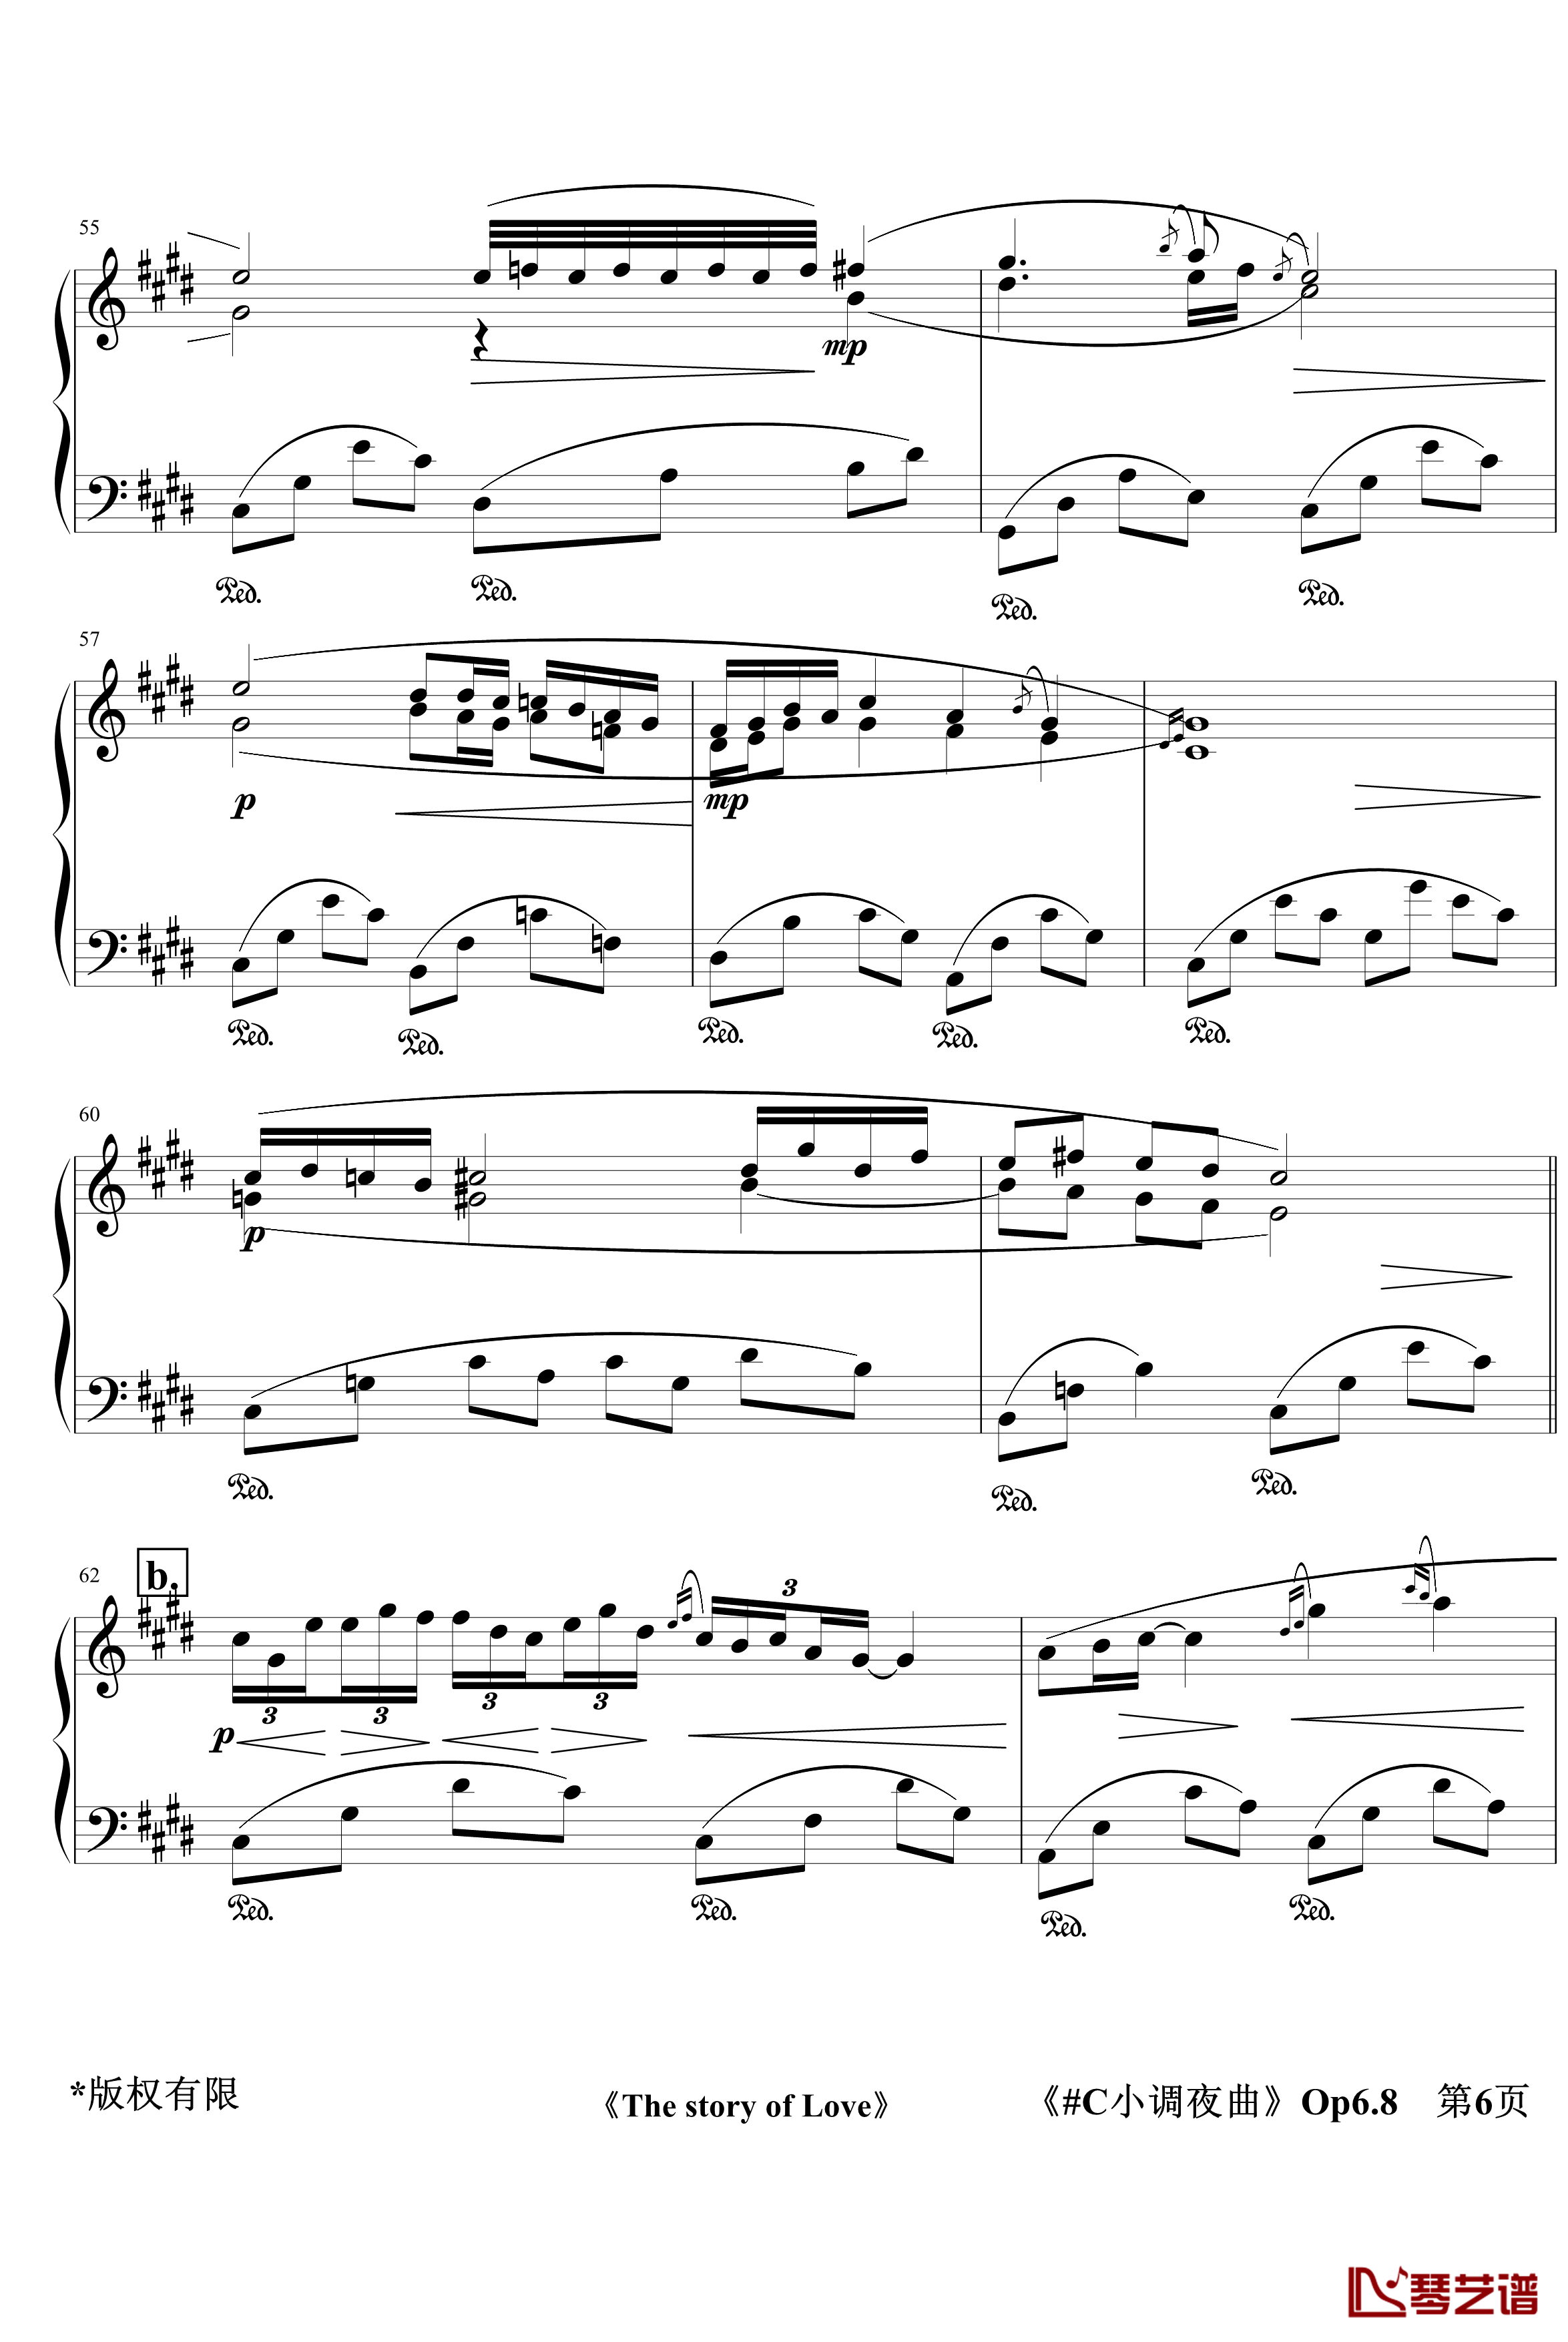 C小调夜曲Op6.8钢琴谱-jerry57436